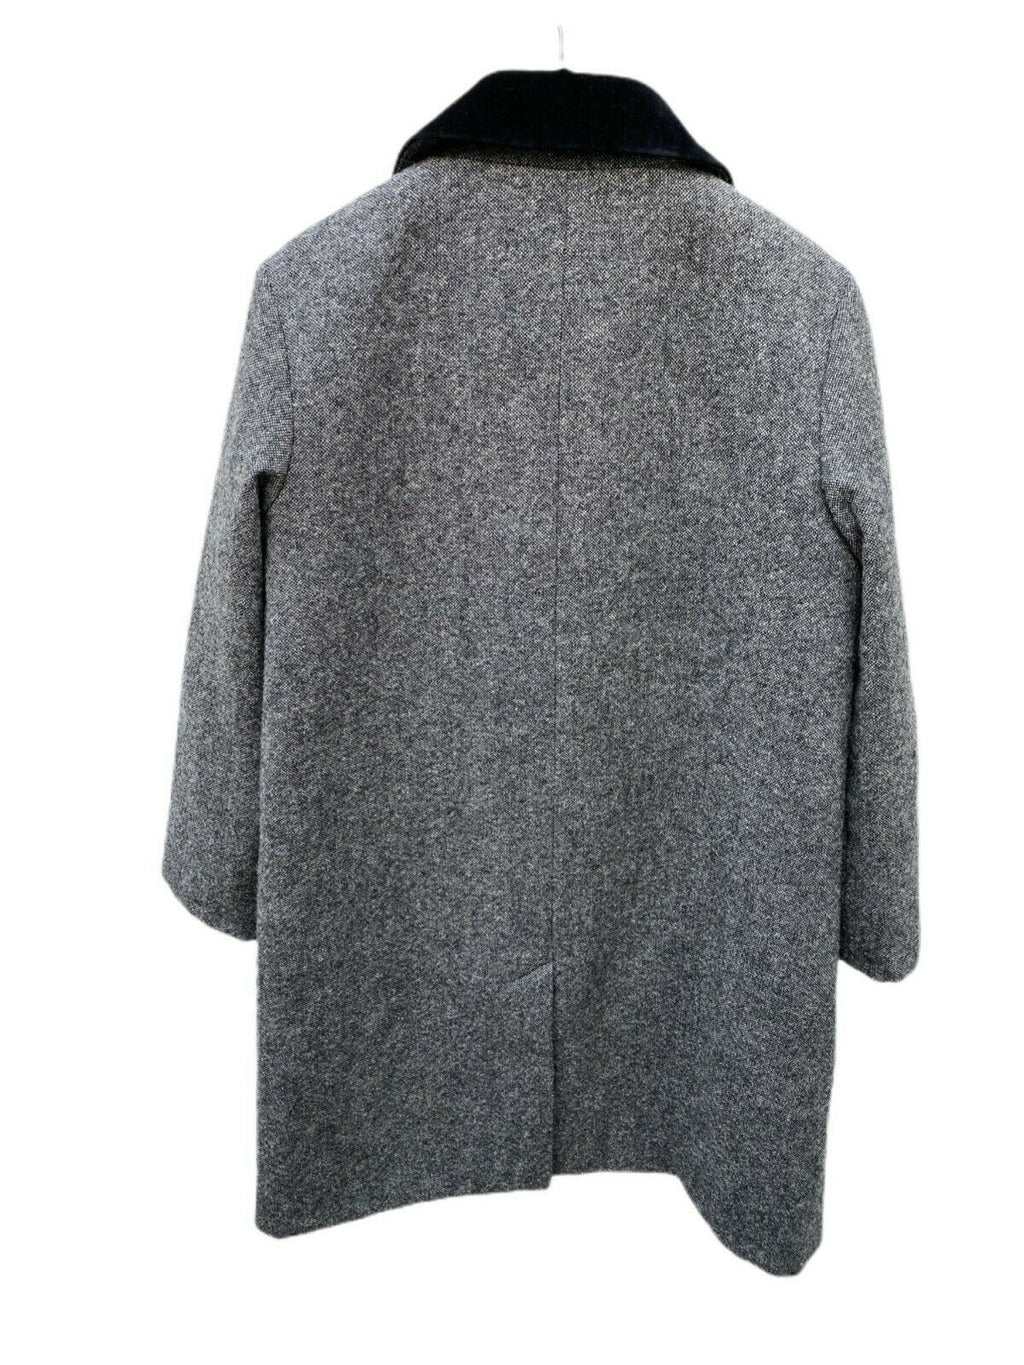 A.P.C. Grey Wool Coat Contrast Corduroy Collar Size XS